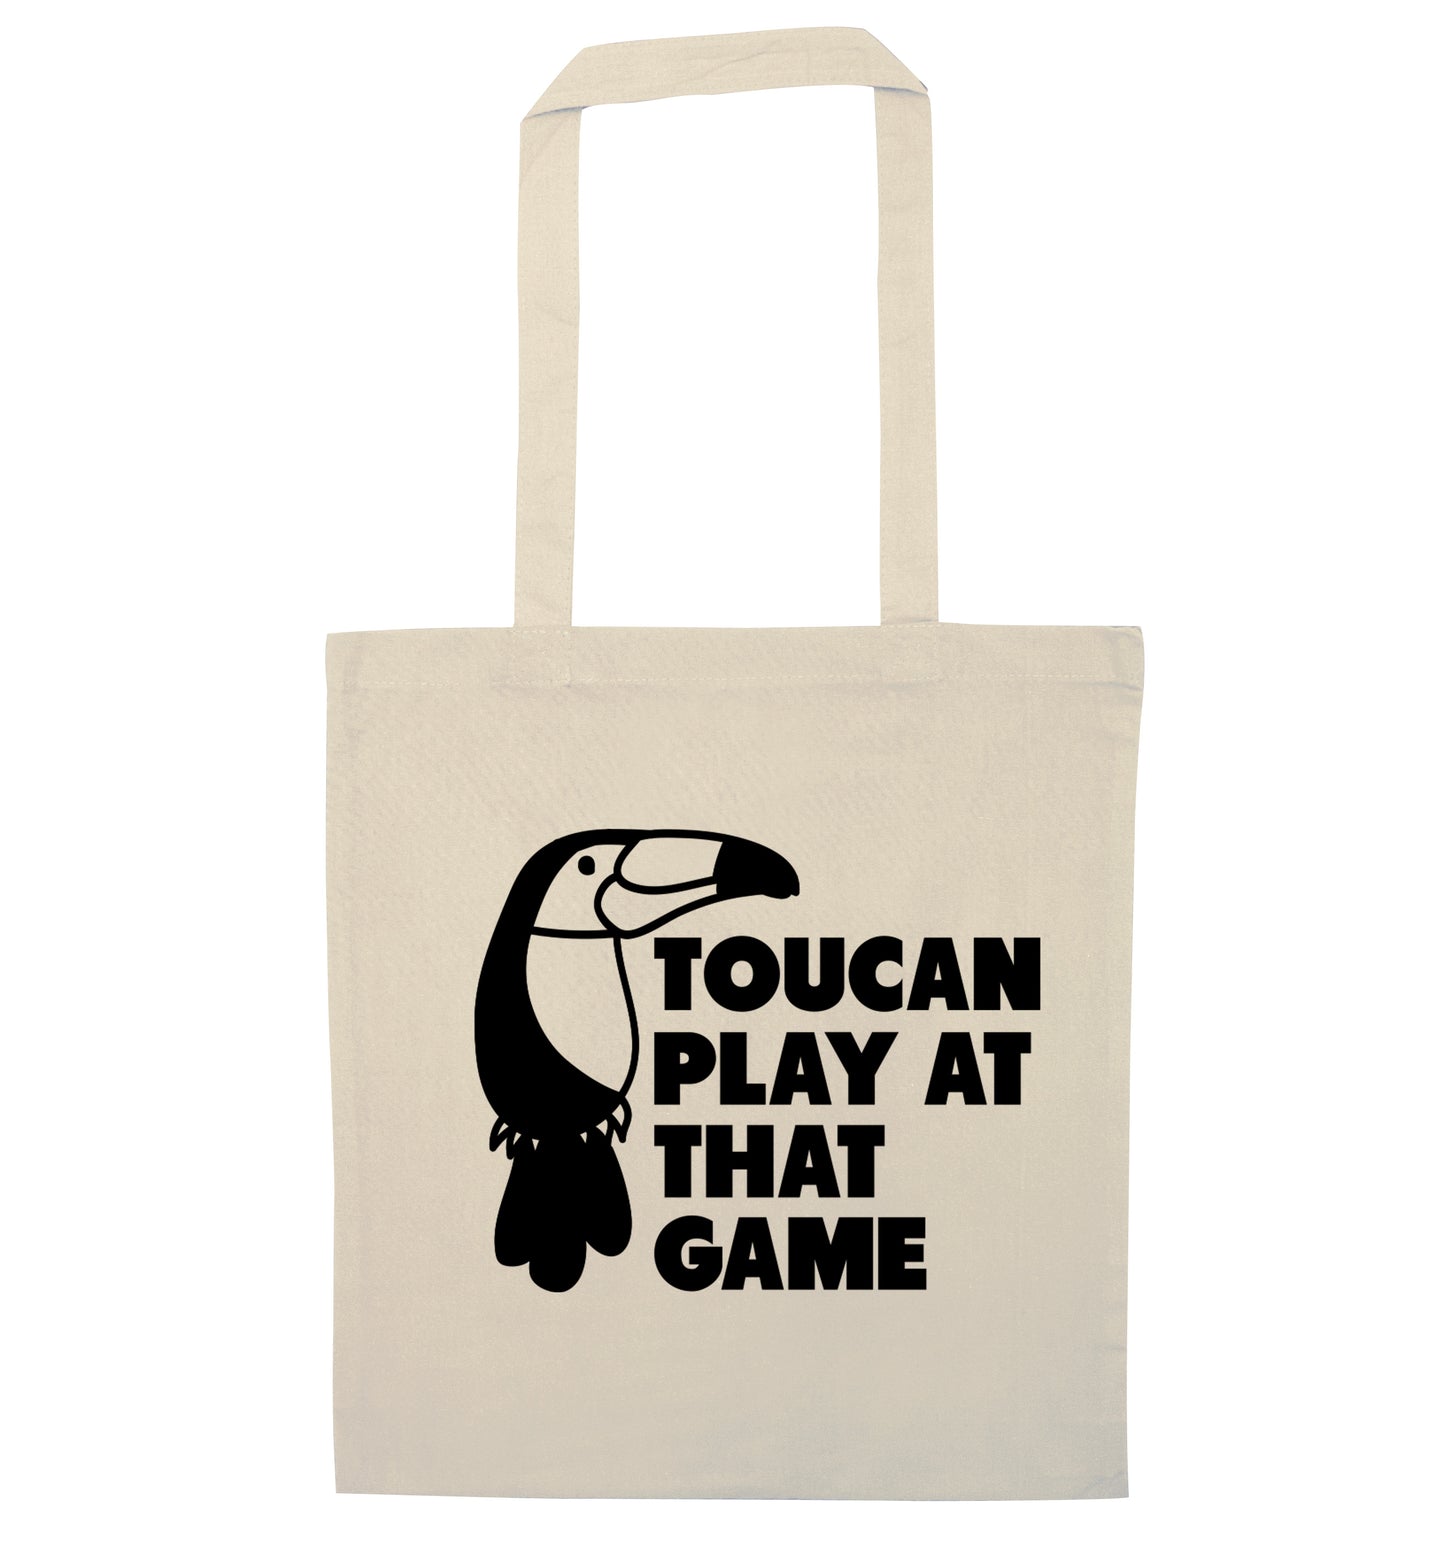 Toucan play at that game natural tote bag